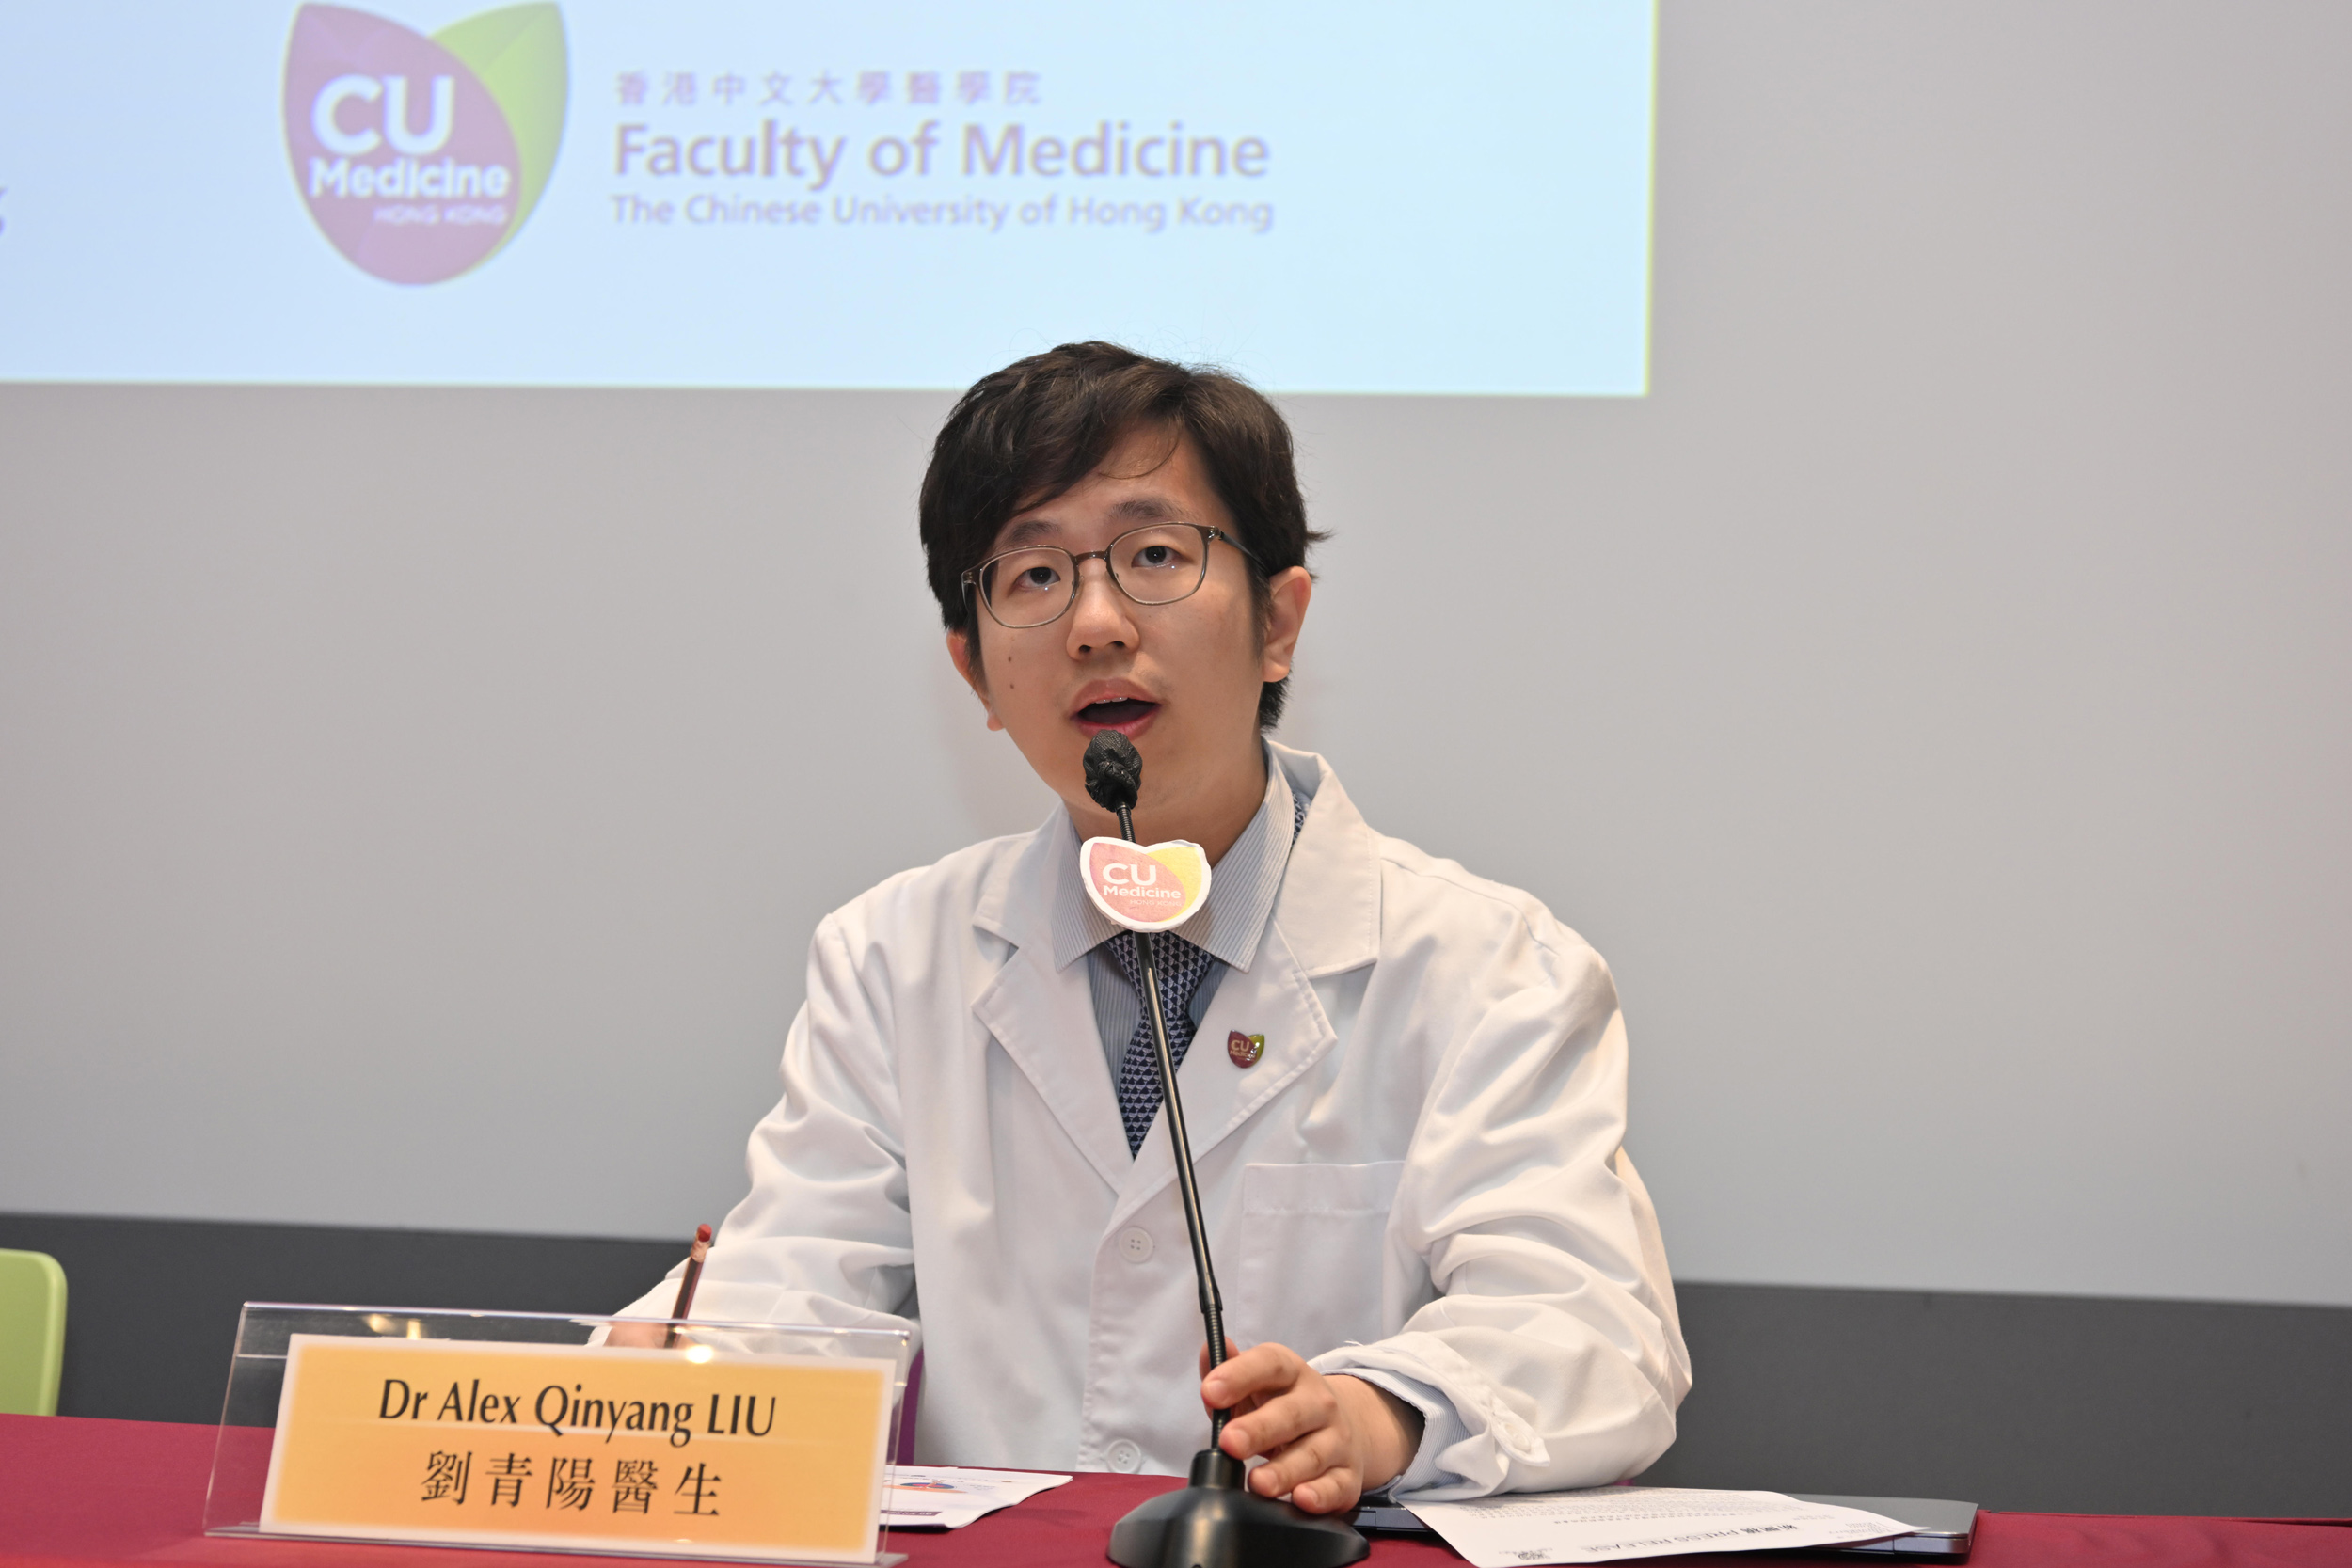 Dr Alex Liu